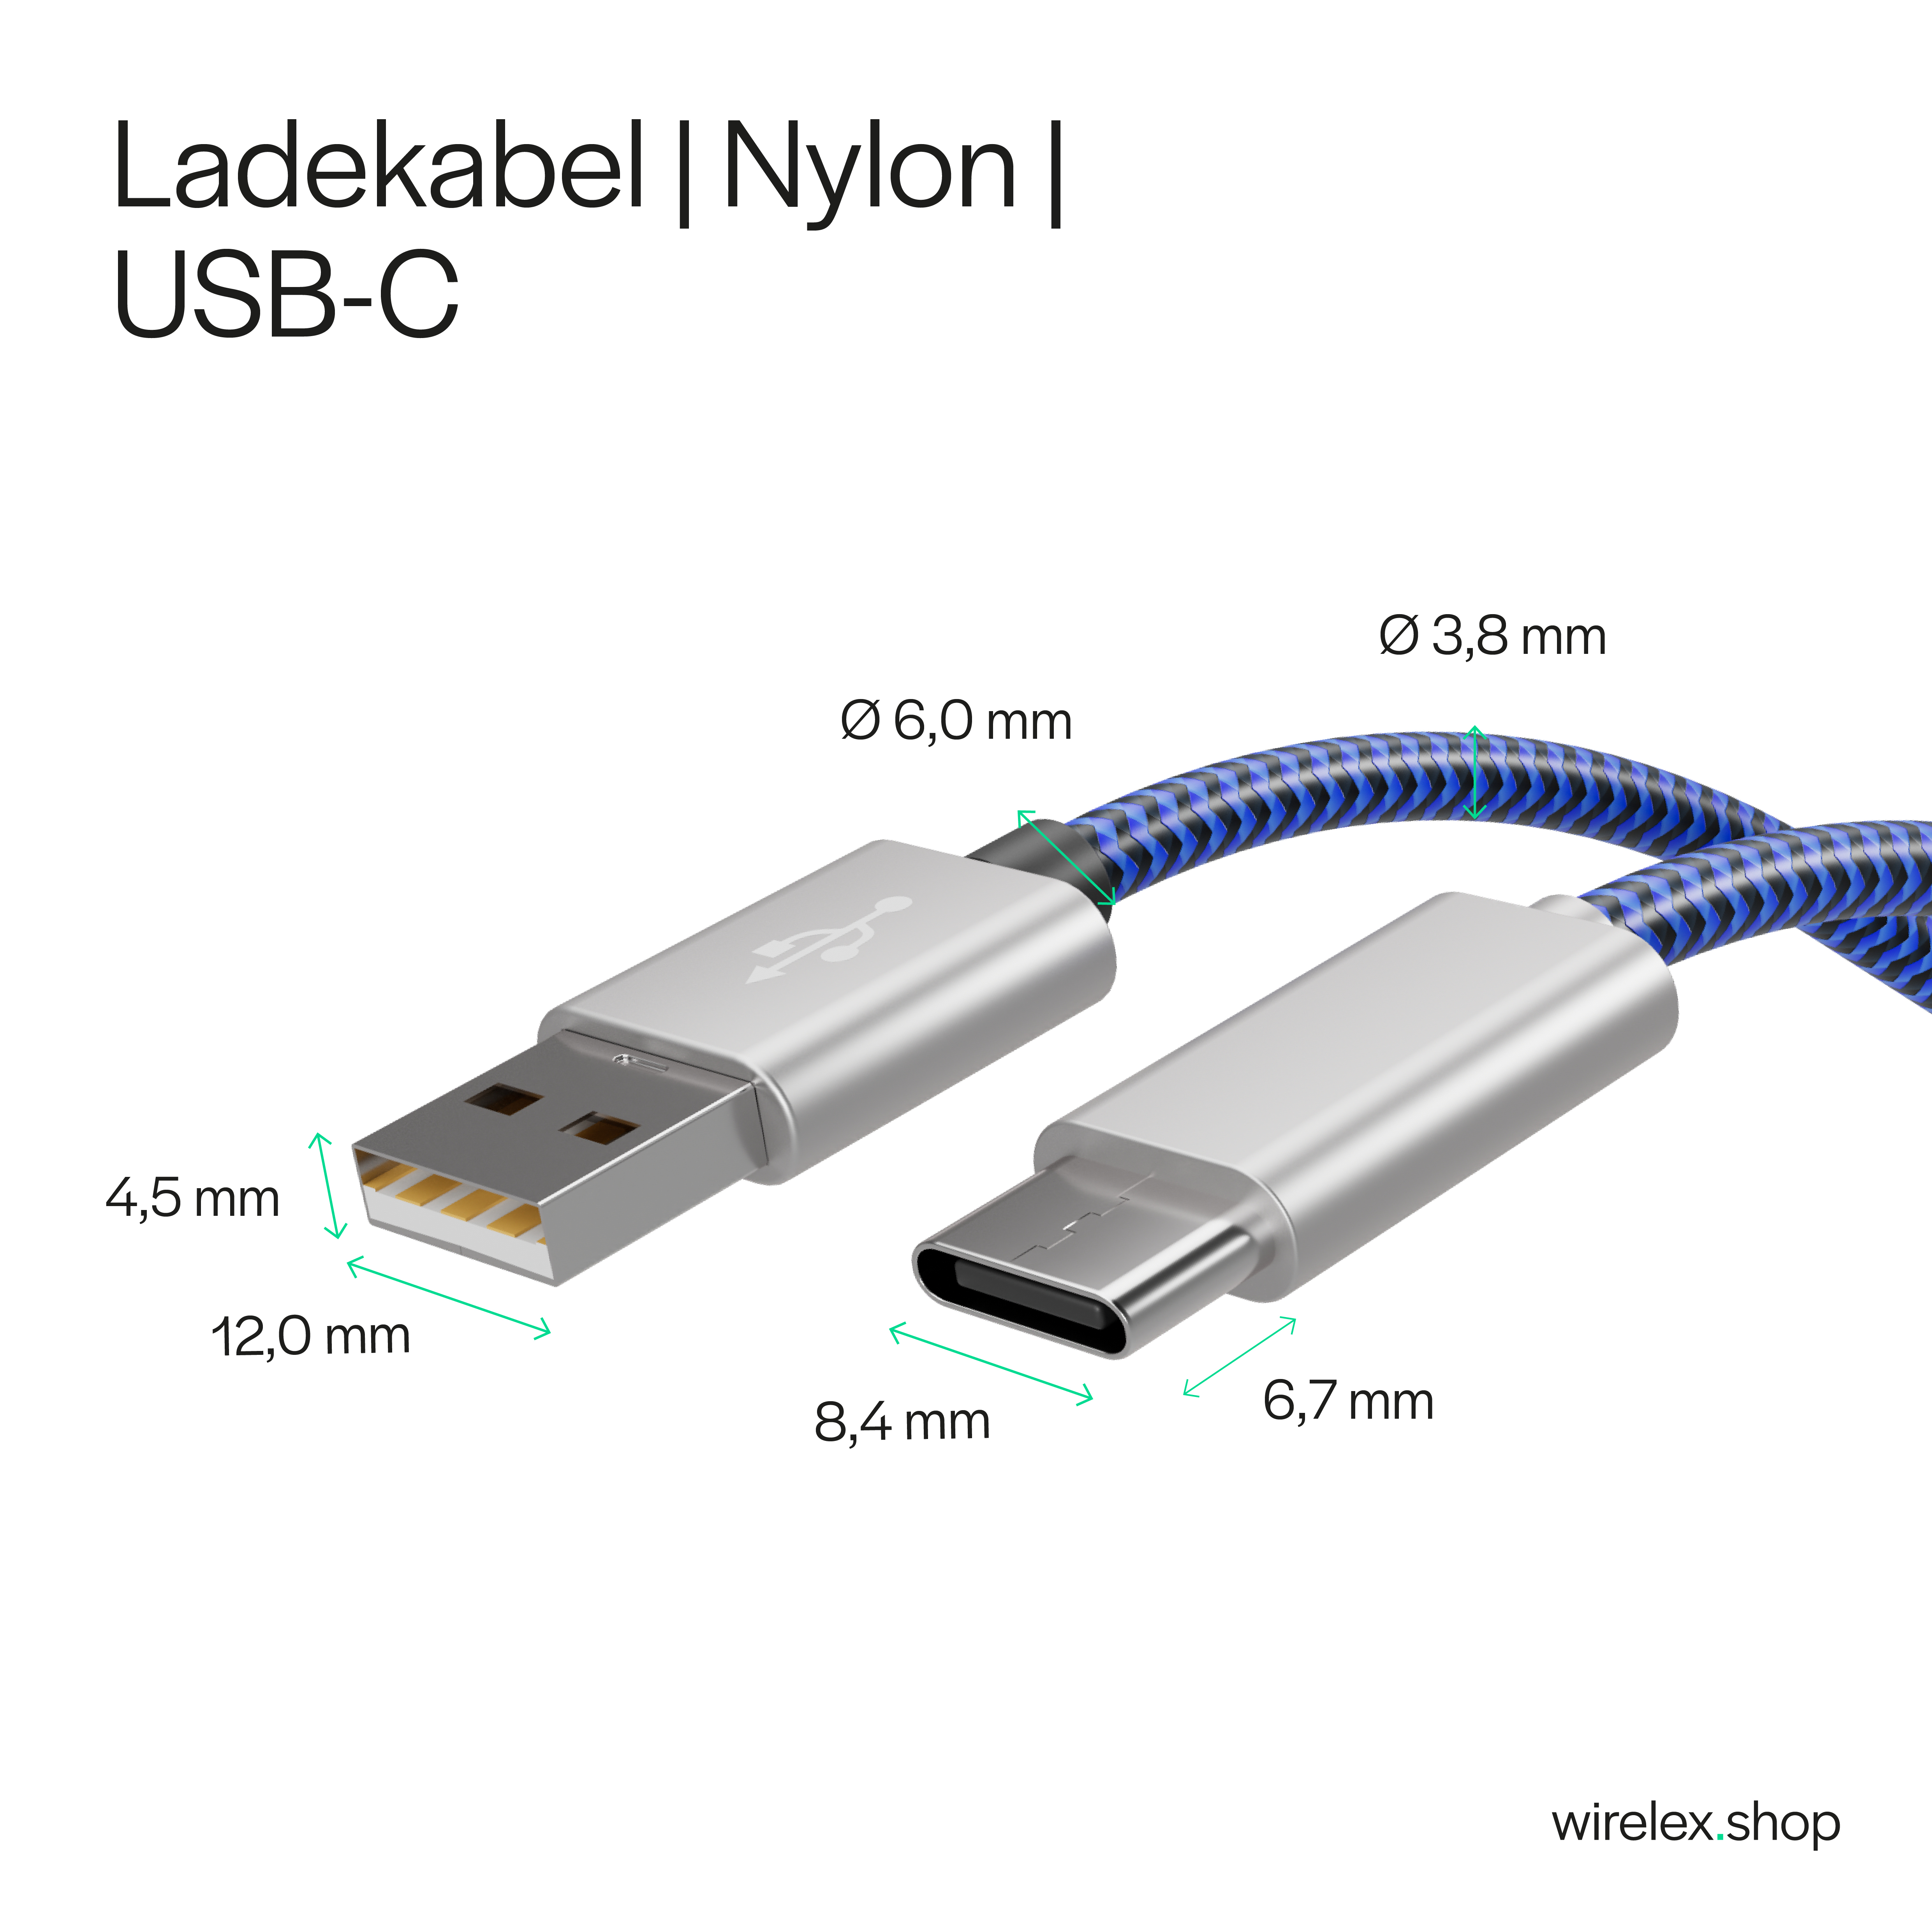 0,3m USB KABELBUDE blau USB Stecker auf USB-Ladekabel C, A Typ Kabel